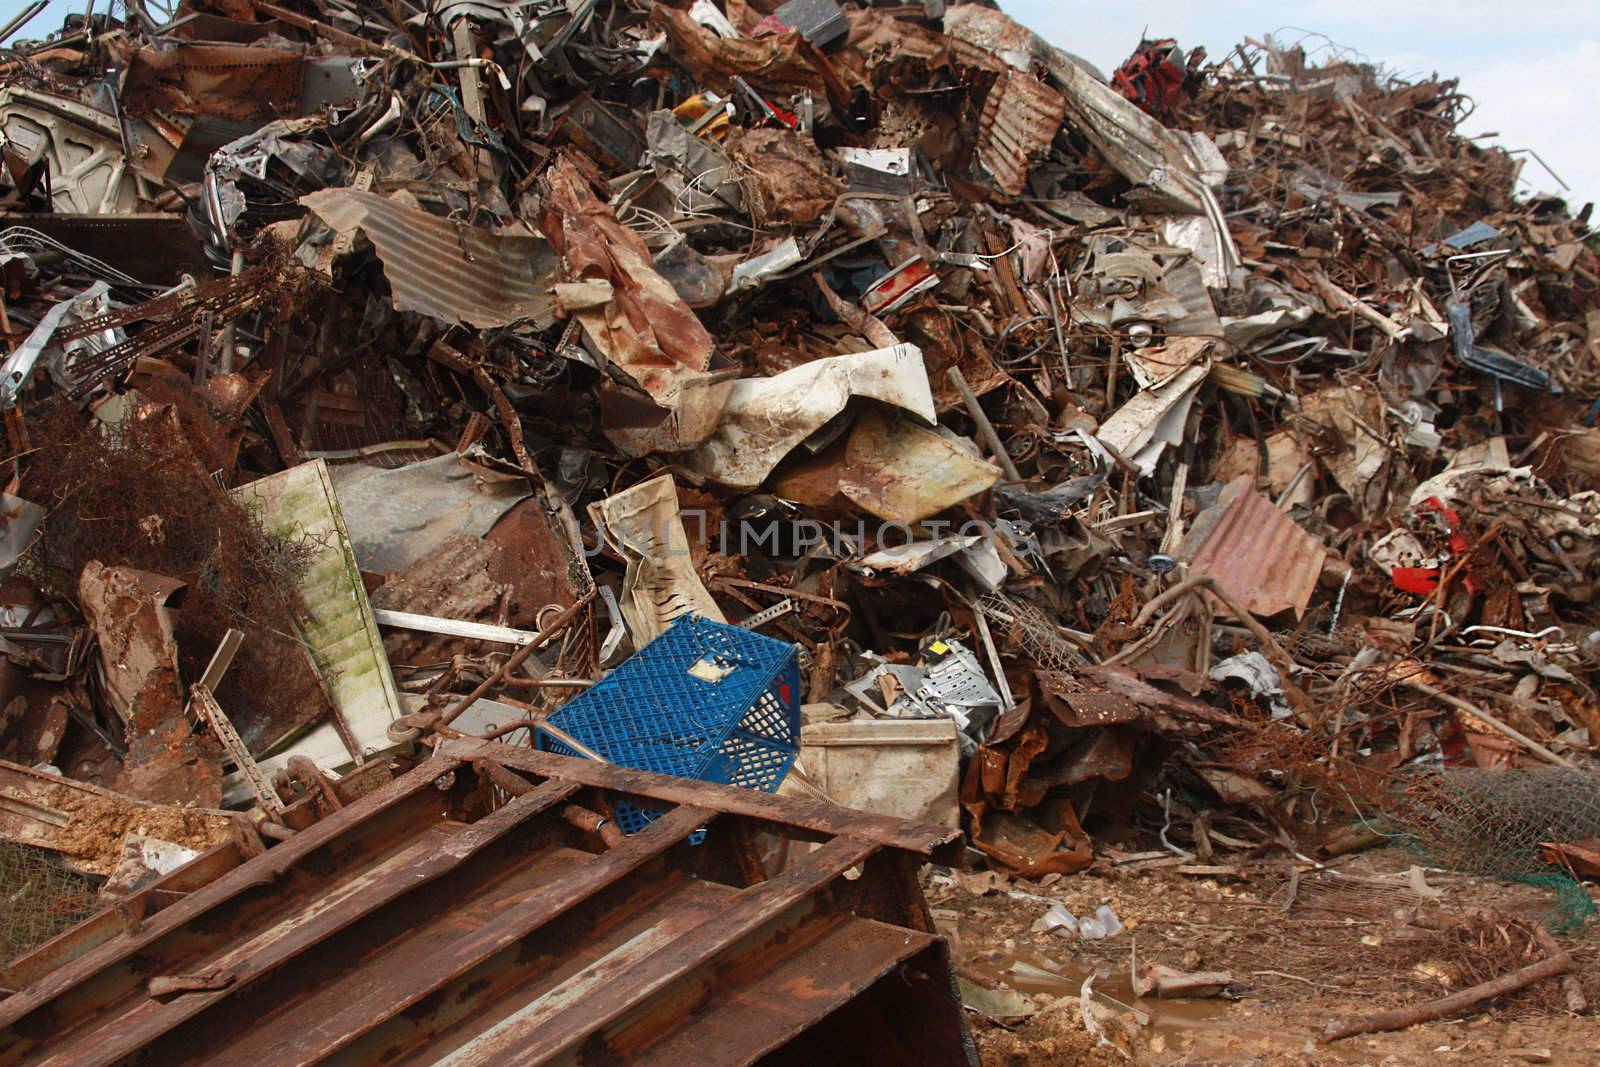 Scrap Metal Recycling (Junk Yard) by dacasdo